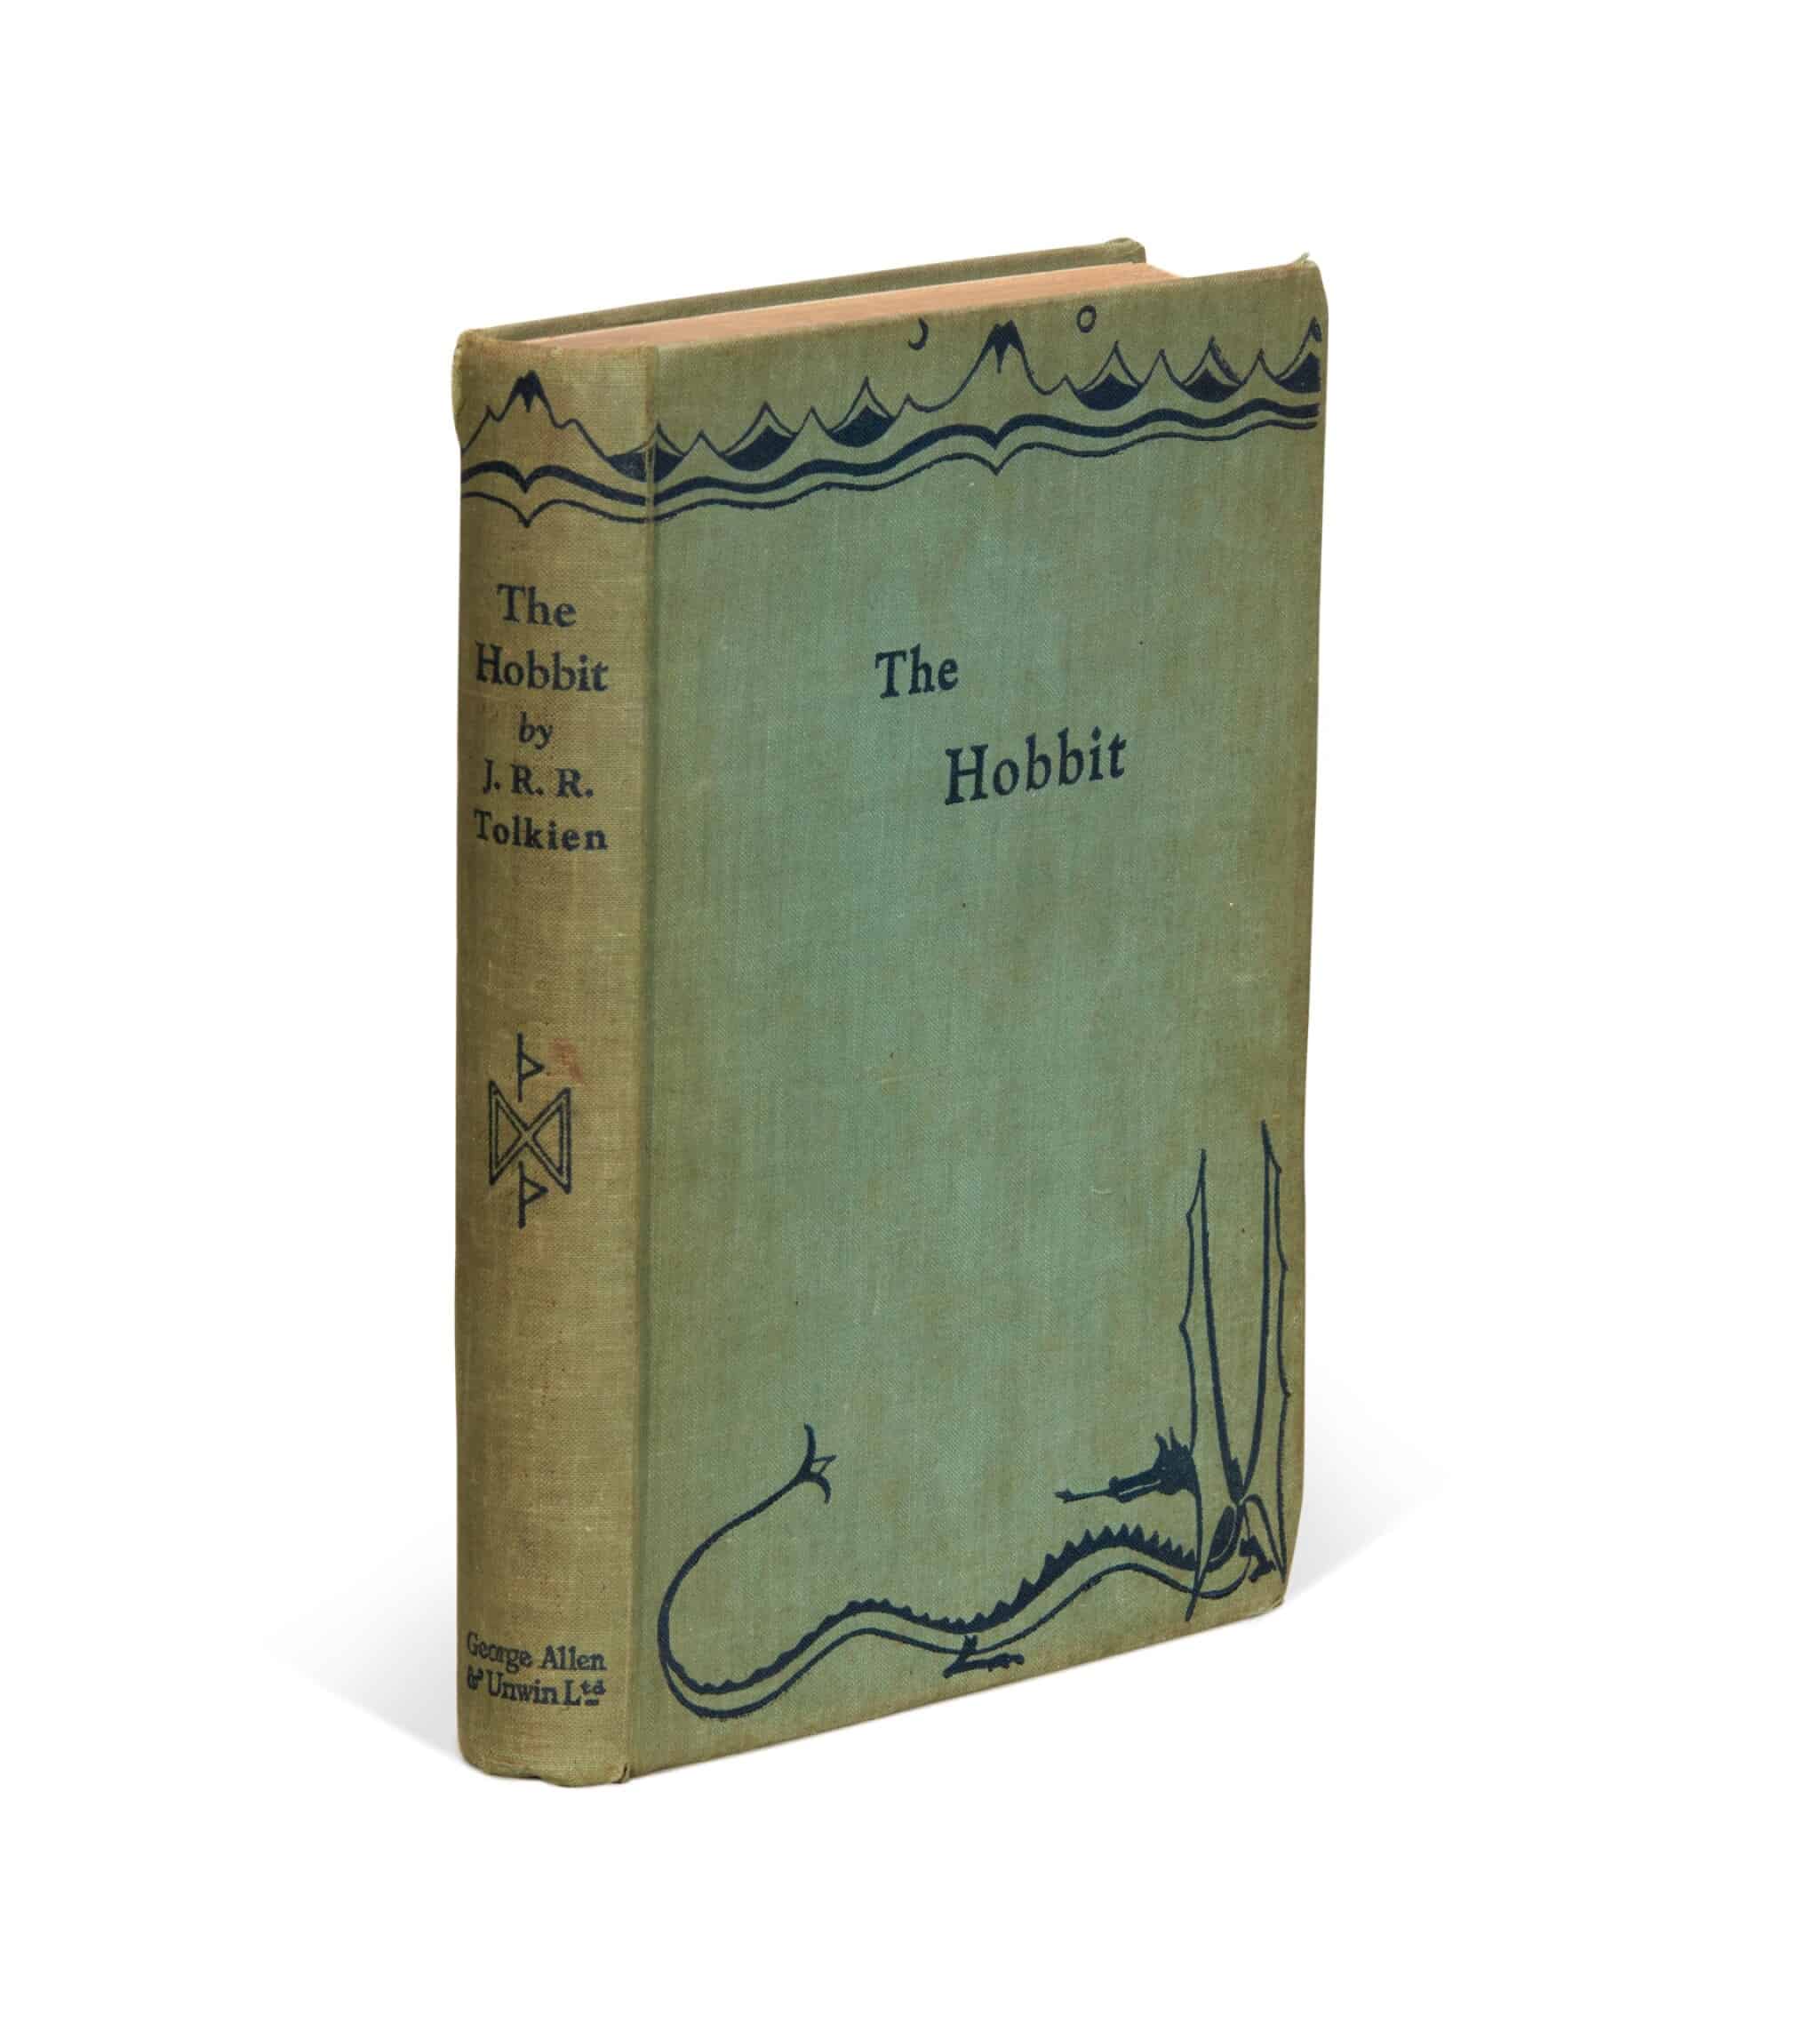 “The Hobbit” by J.R.R. Tolkien